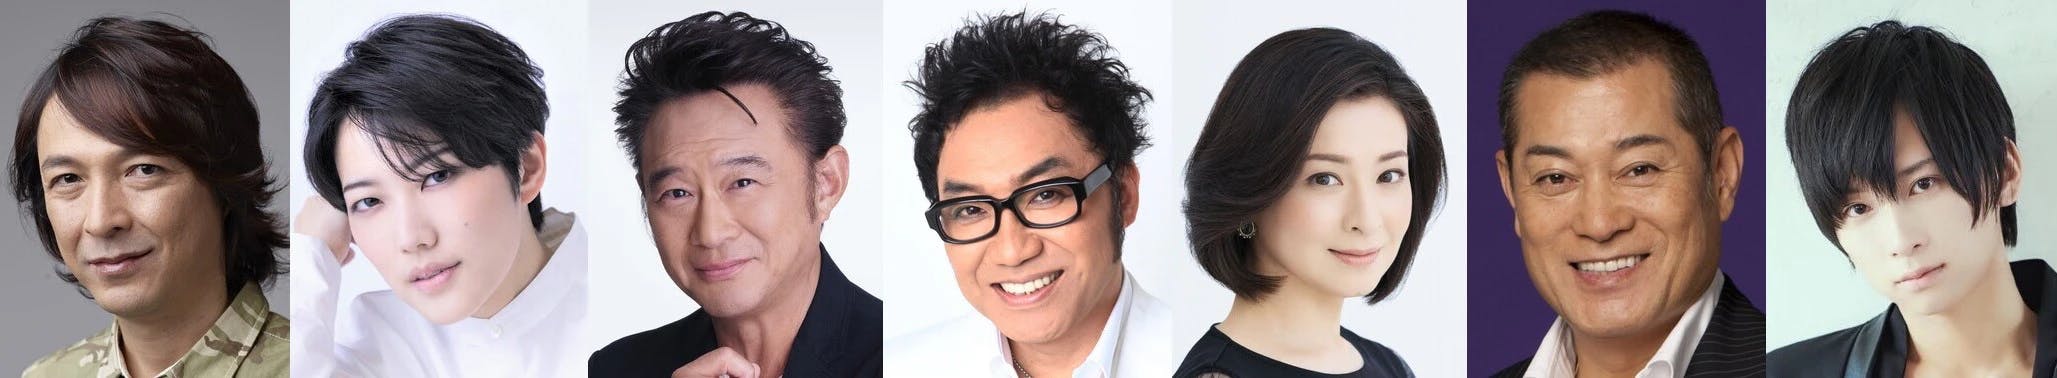 Norika Fujiwara, Ayame Goriki, and Reiko Takashima star in the stage play "Mage the Cat's Eye" Masahiko Kawahara, Hiroki Nanami, Eiichiro Funakoshi, Croquette, Rei Dan, Ken Matsudaira, and Yoshihiko Aramaki will appear at the after event!